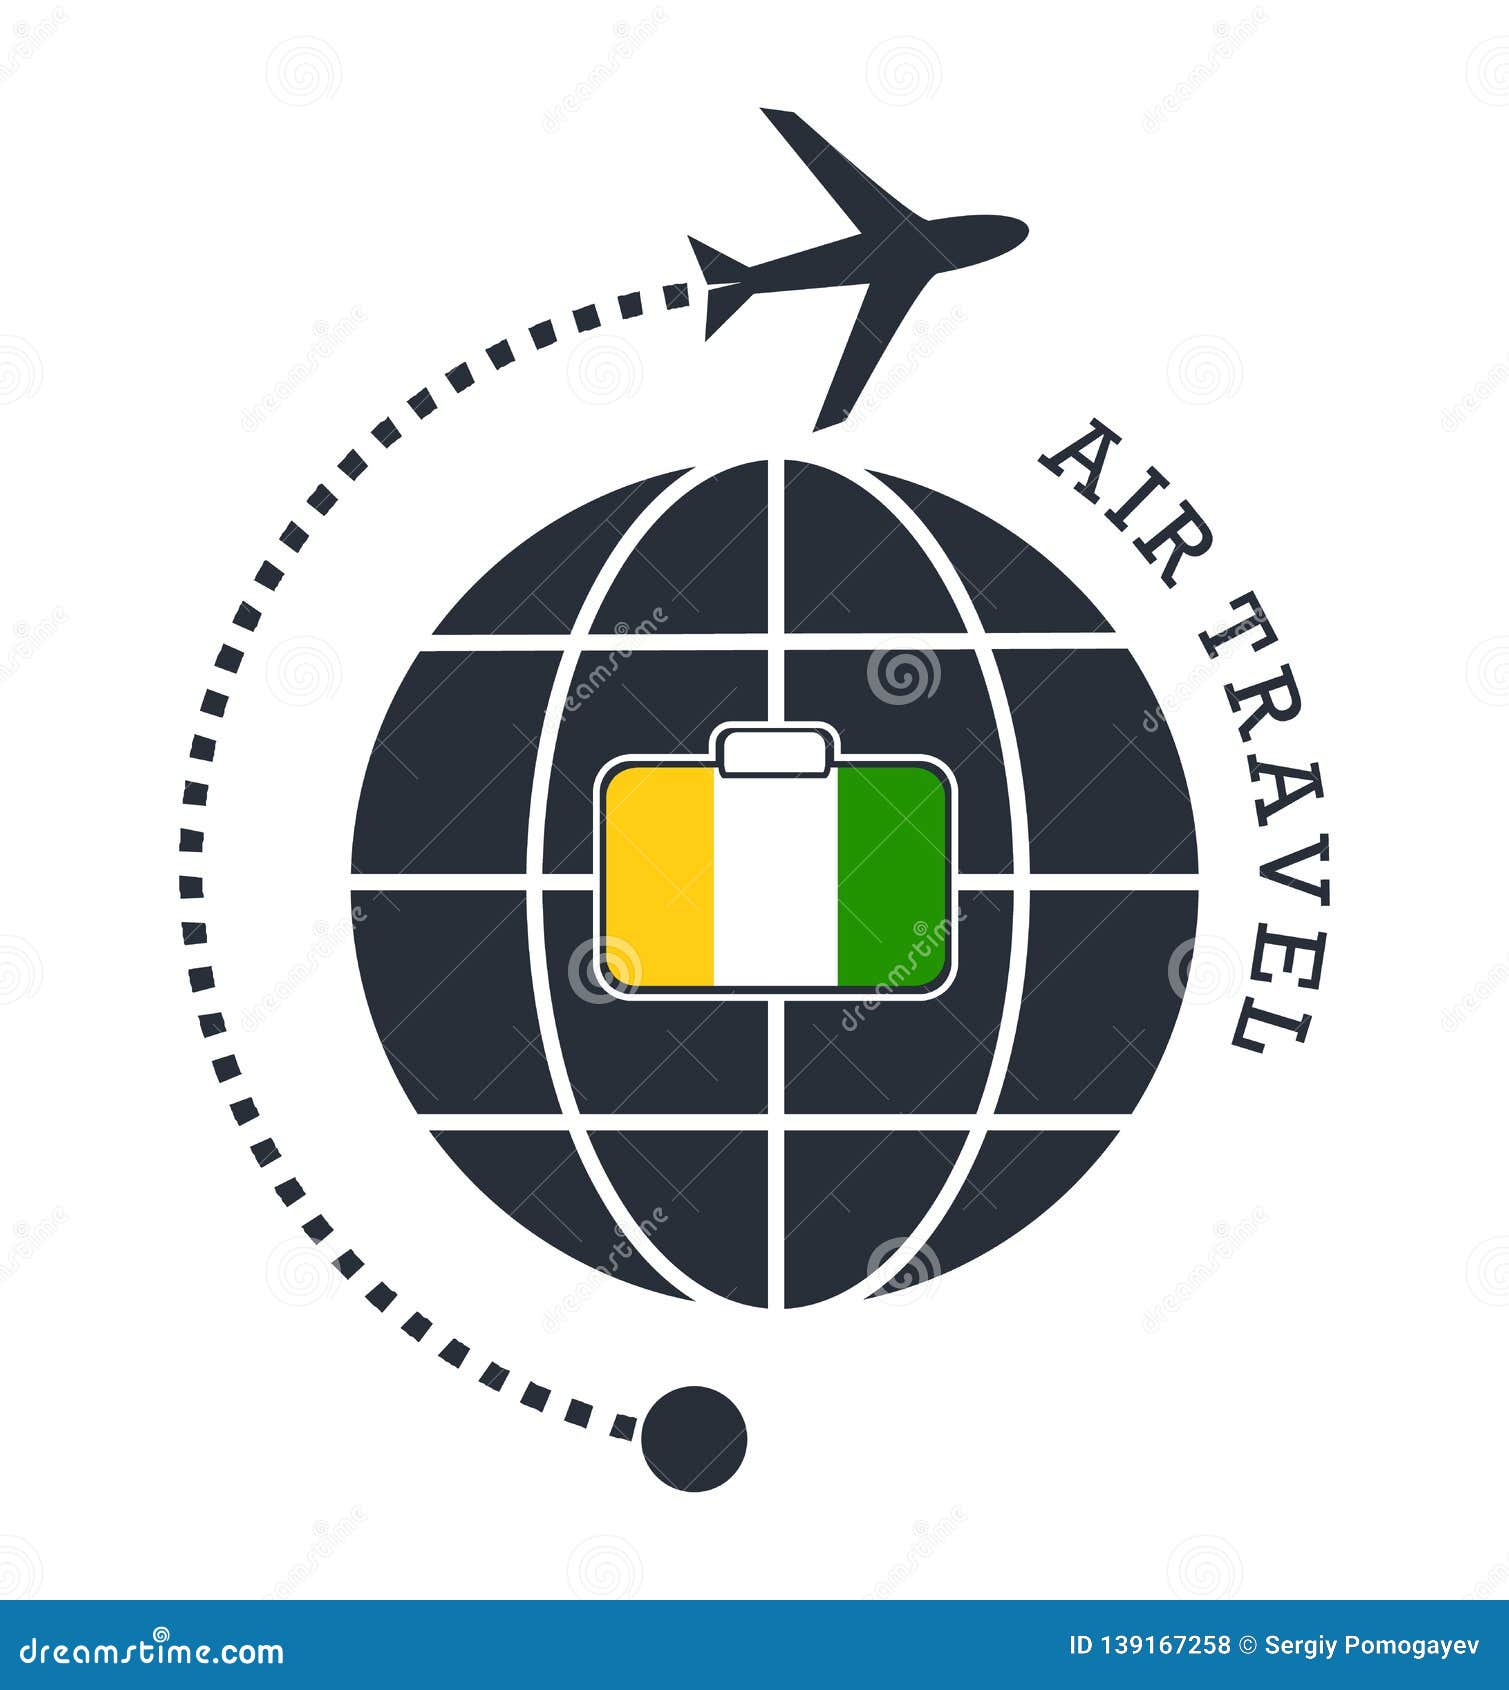 ireland air travel